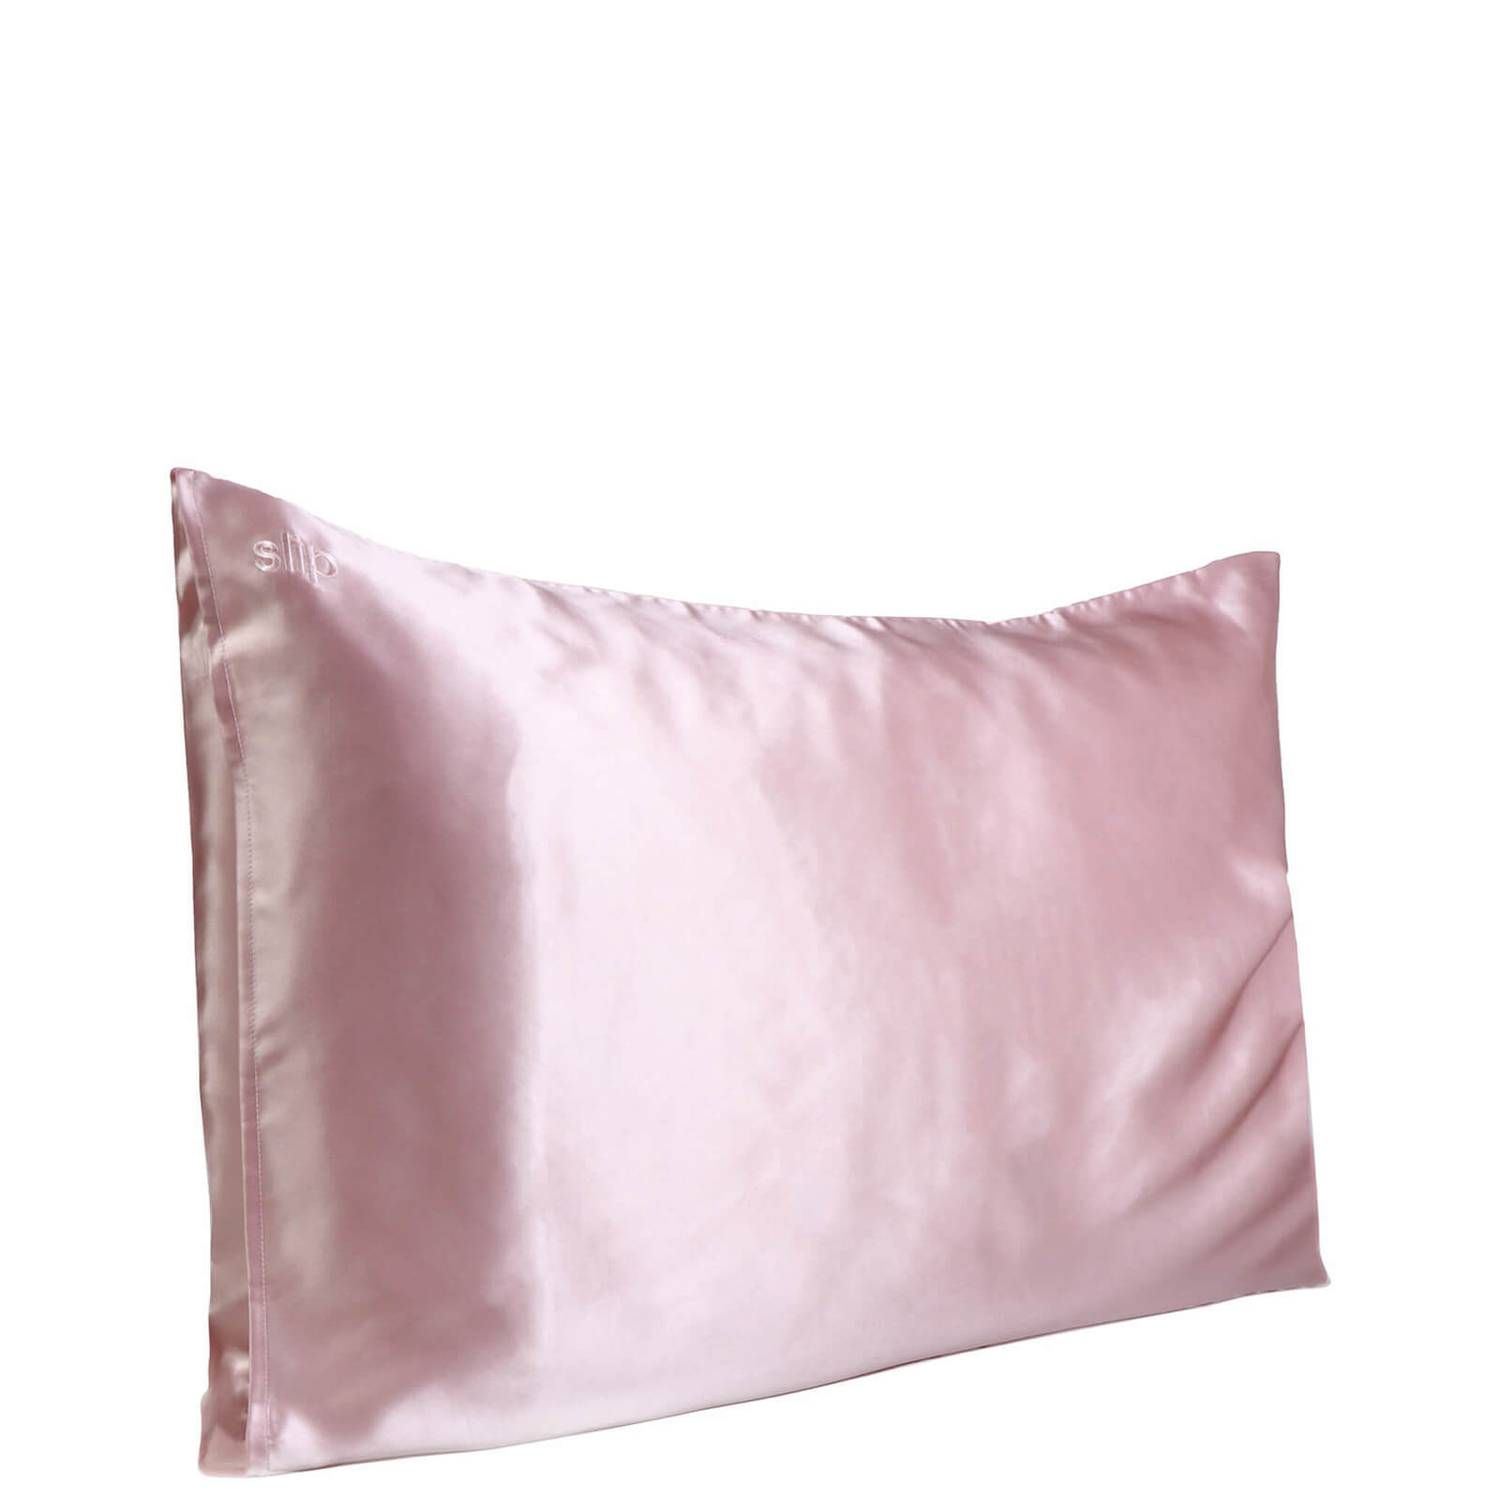 Slip pure silk pillowcase - Queen (1 piece) | Dermstore